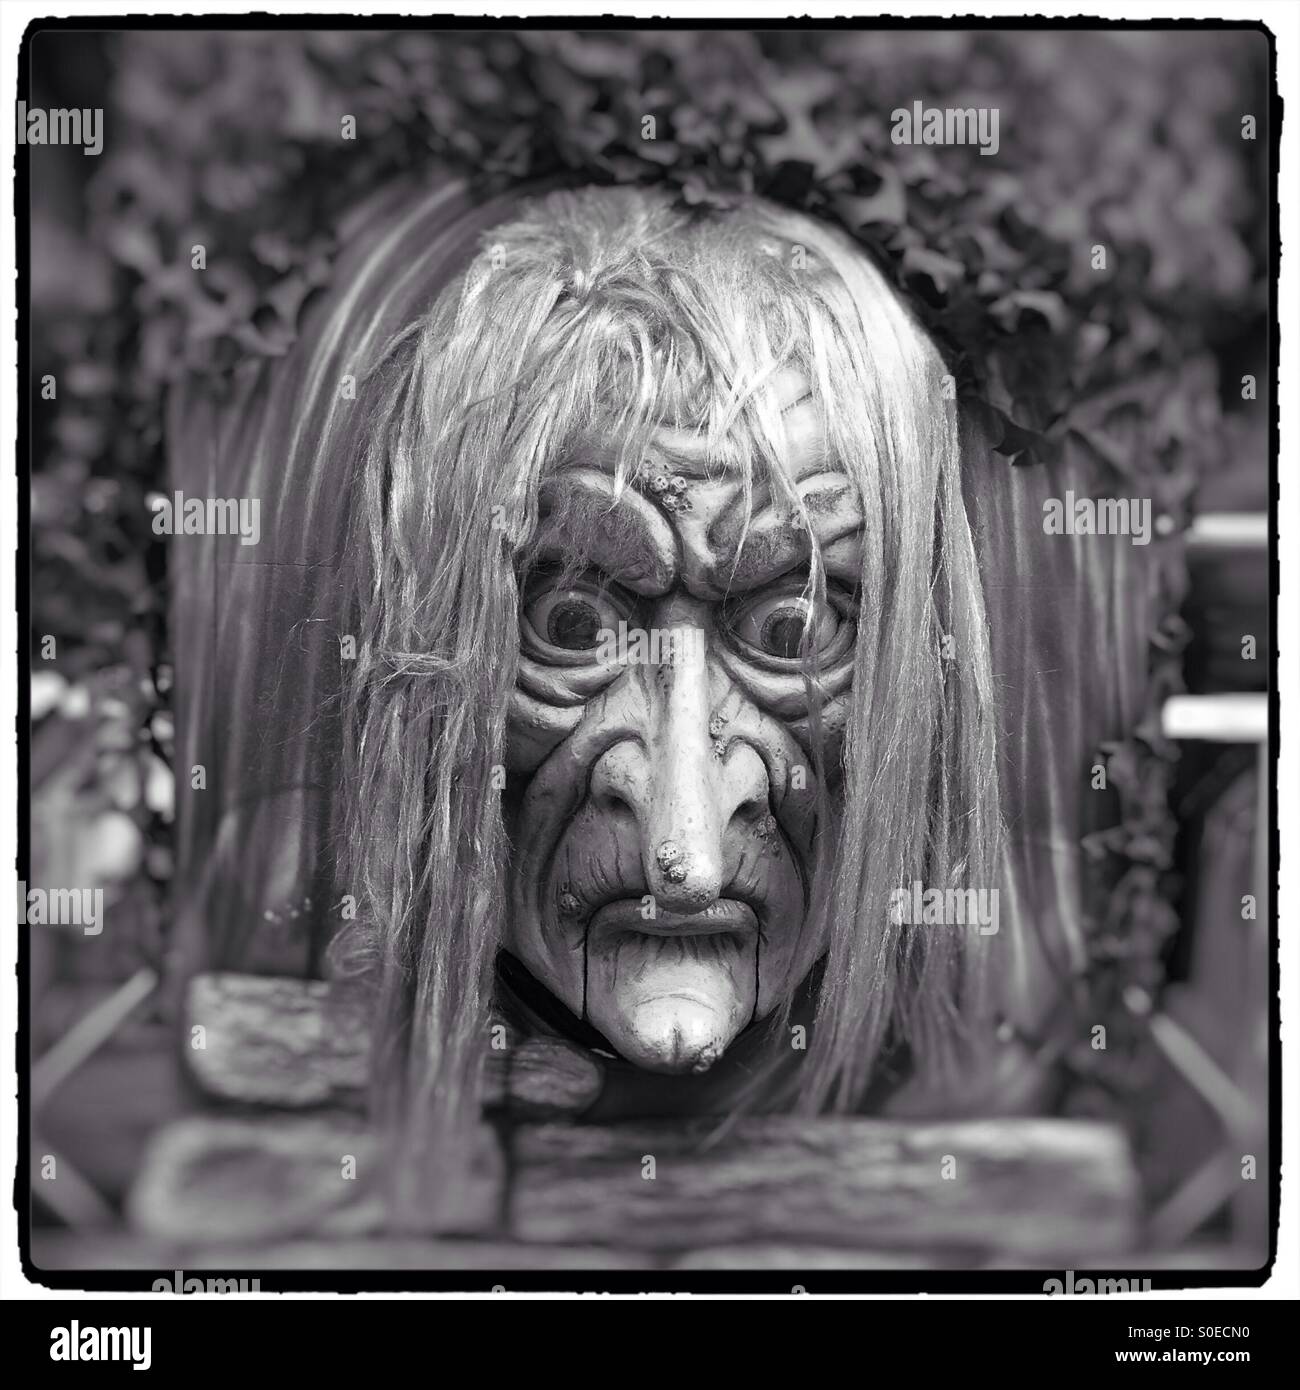 Horror Mask at a fairground in Berlin neukoelln Stock Photo